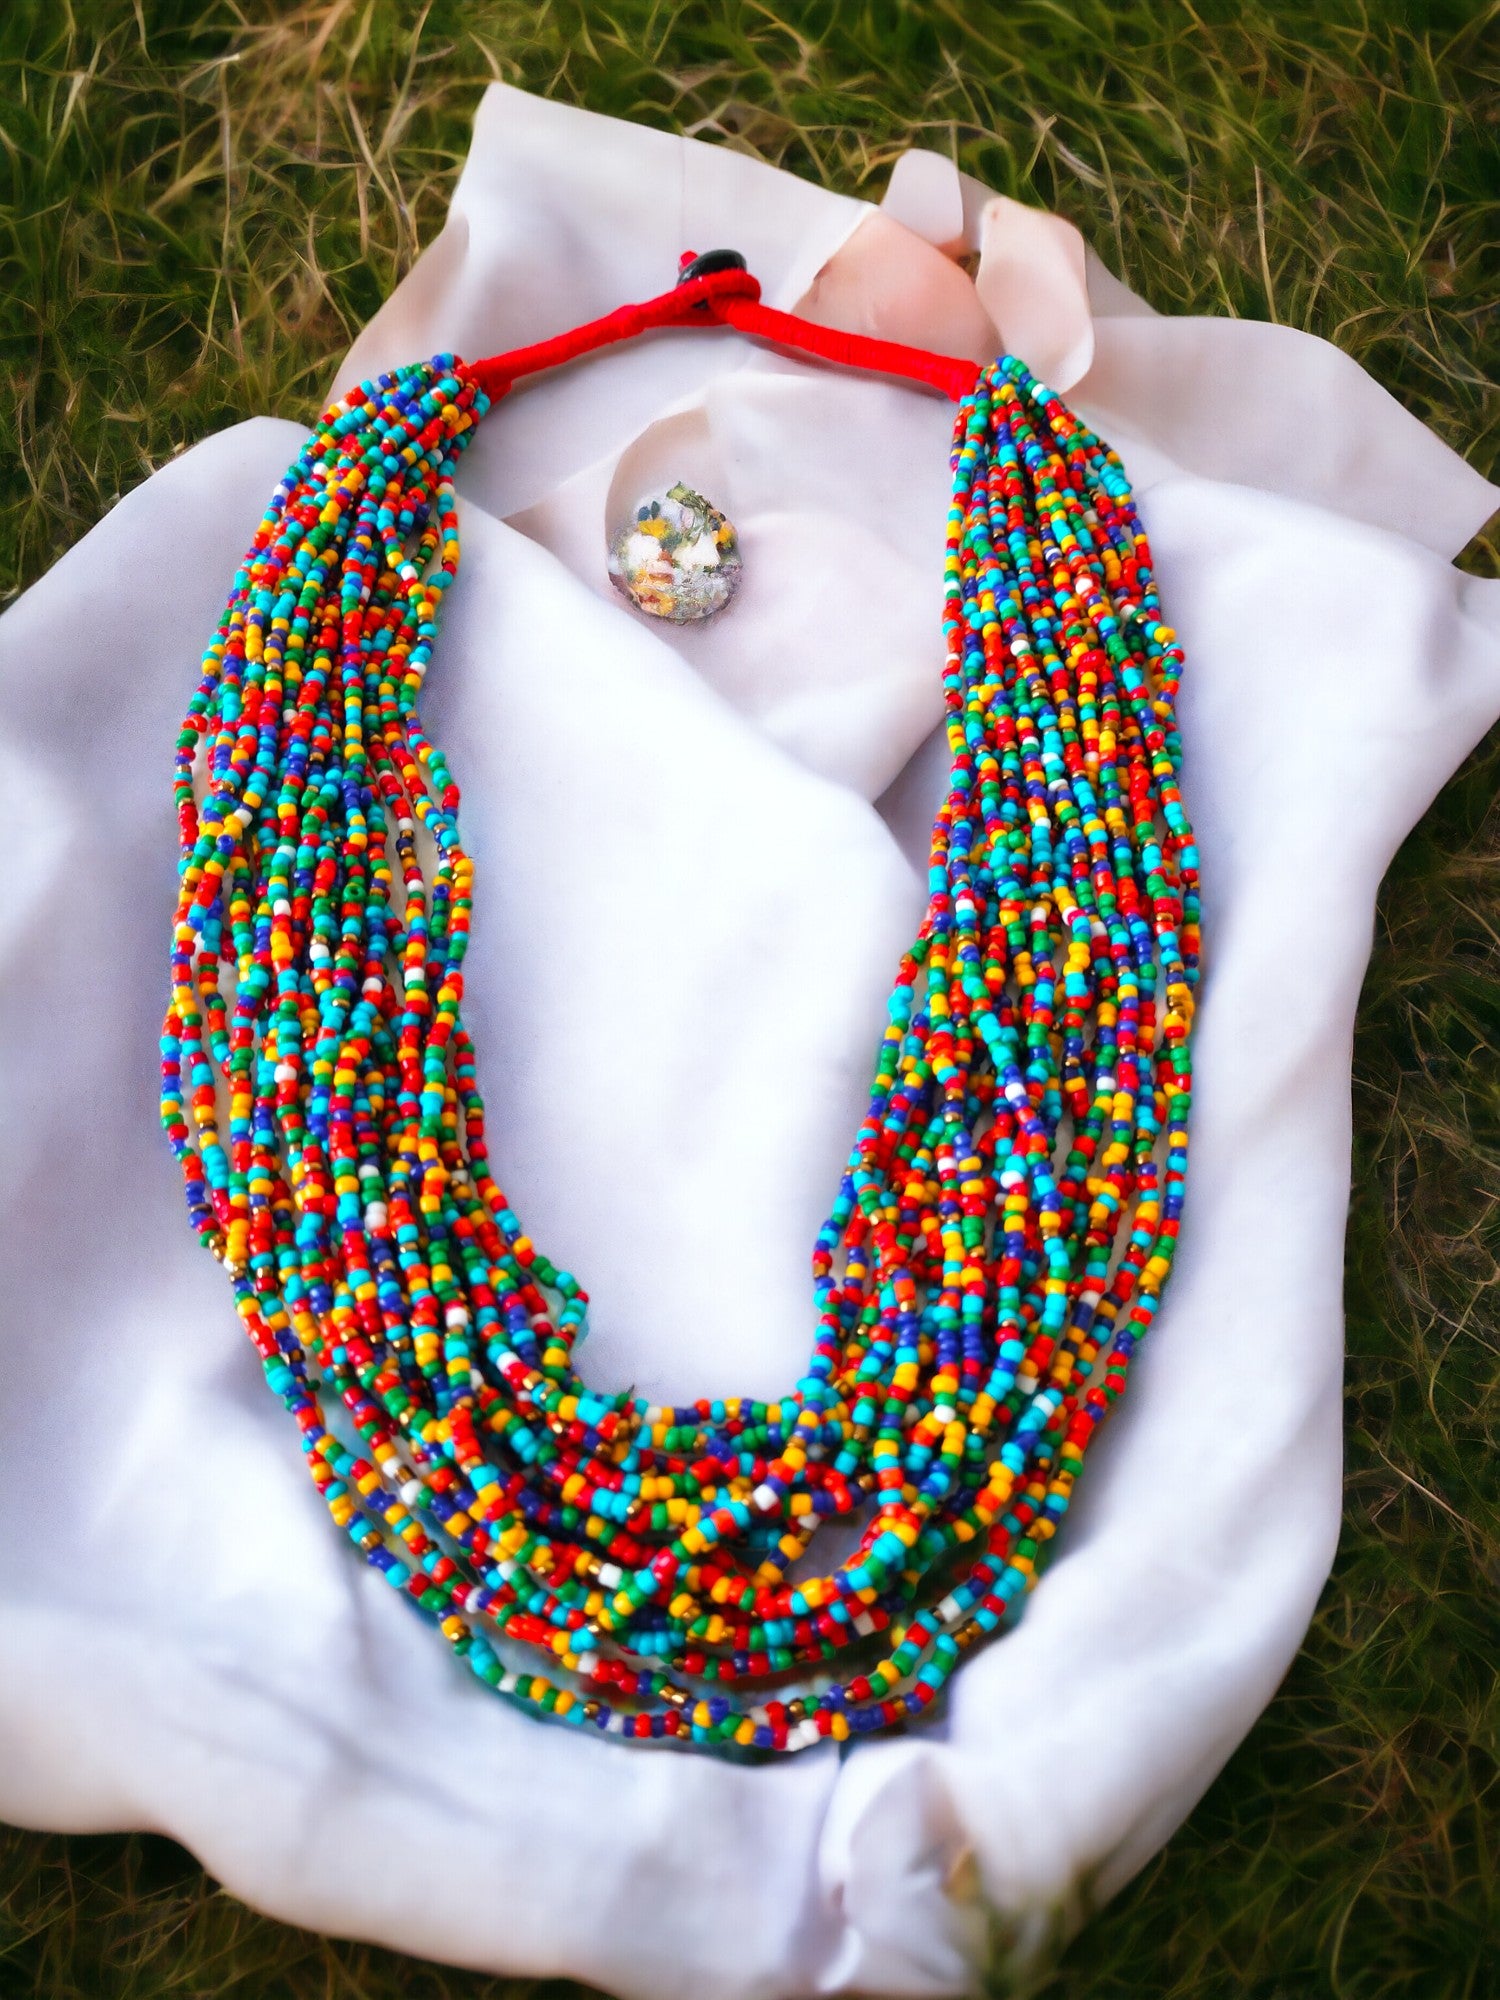 Spectrum Splendour: Handmade Multi-Layered Beaded Necklace (20 Layers)